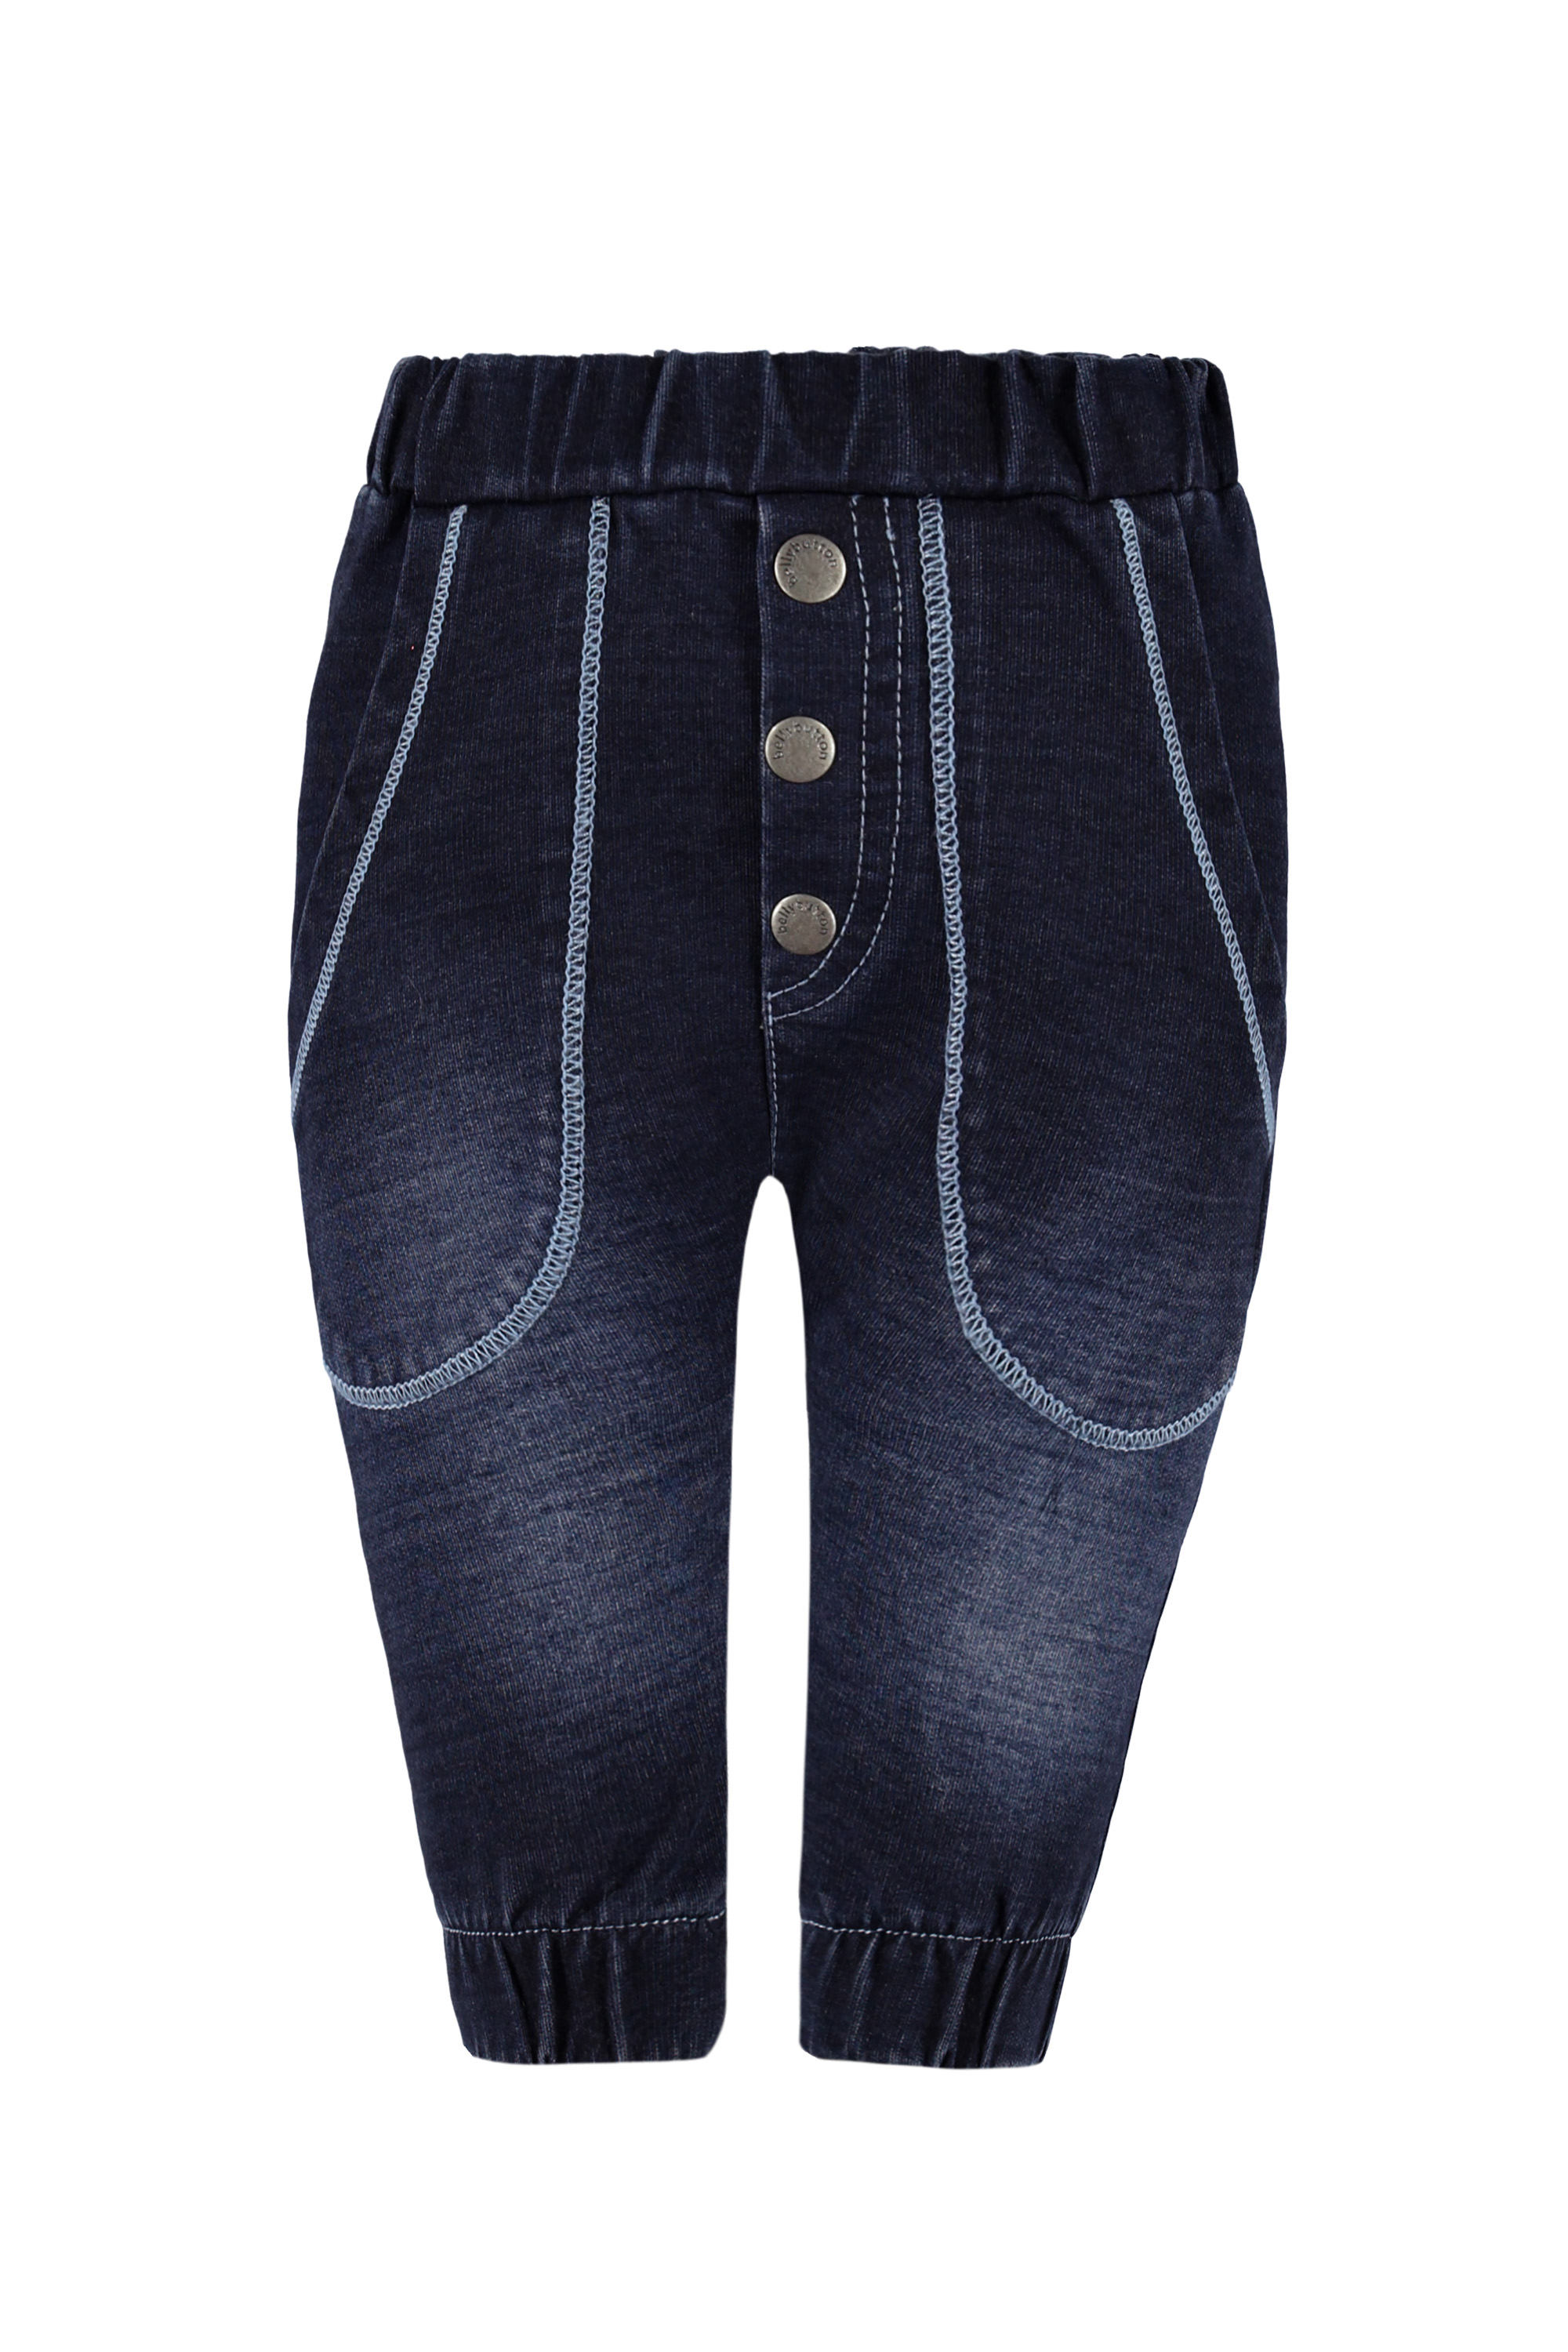 bellybutton Pantaloni Jeans, dark blue denim